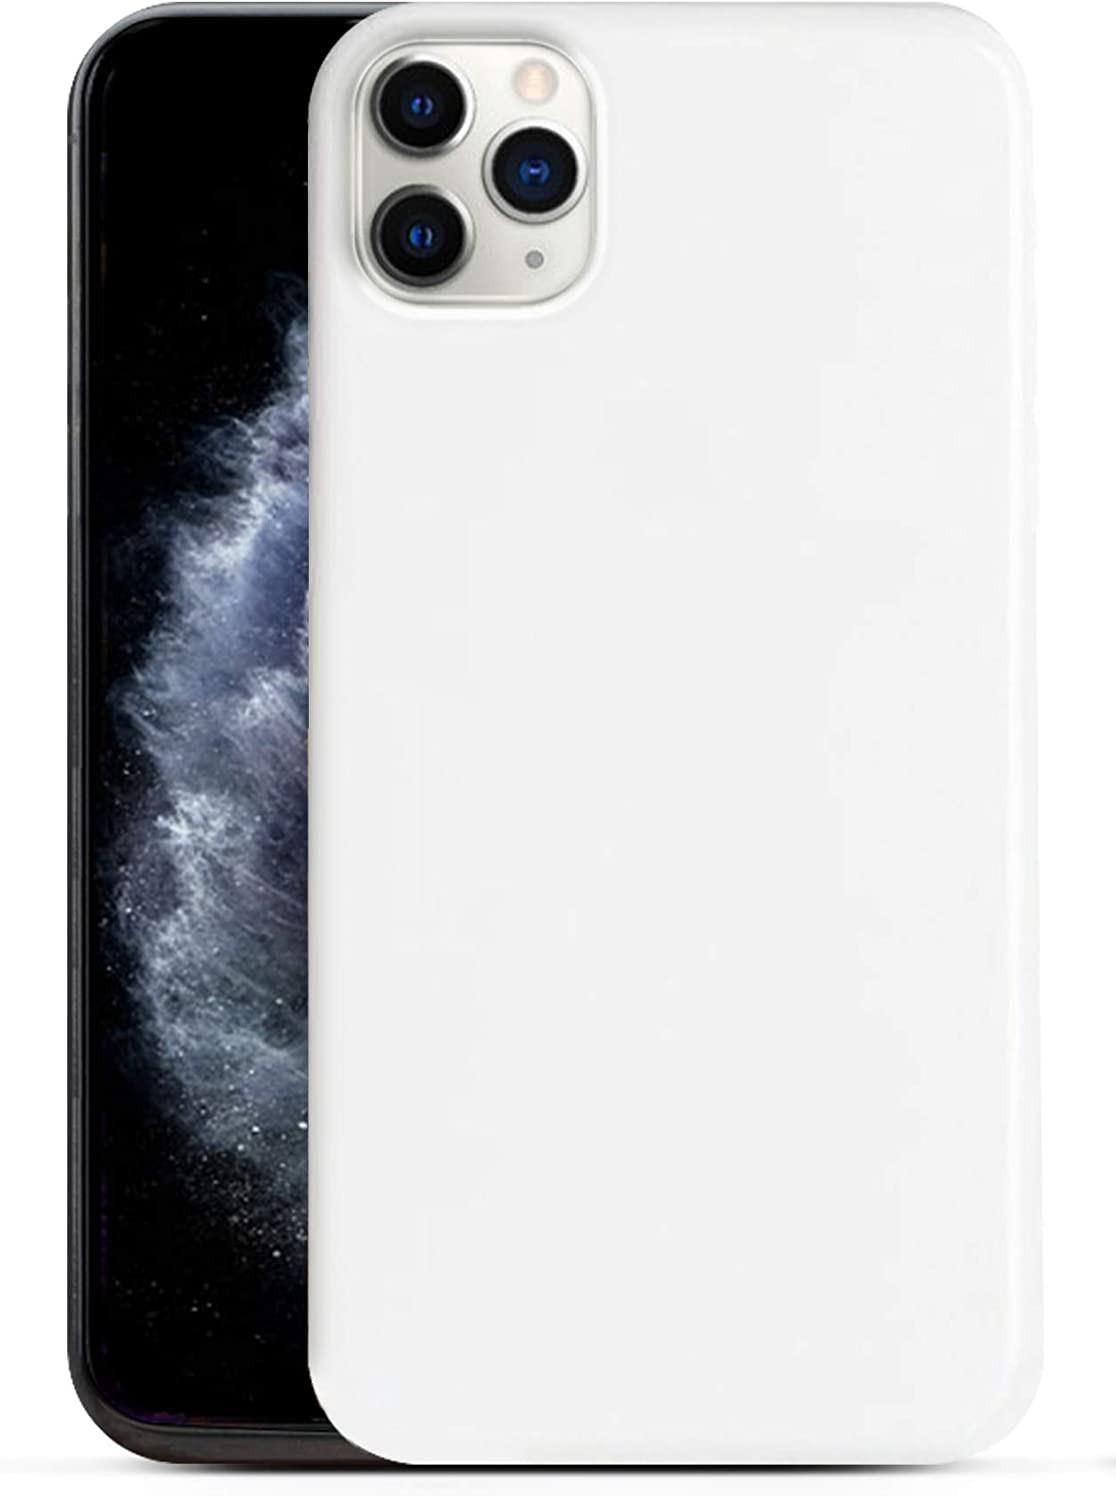 Peel Ultra Thin iPhone 11 Pro Case